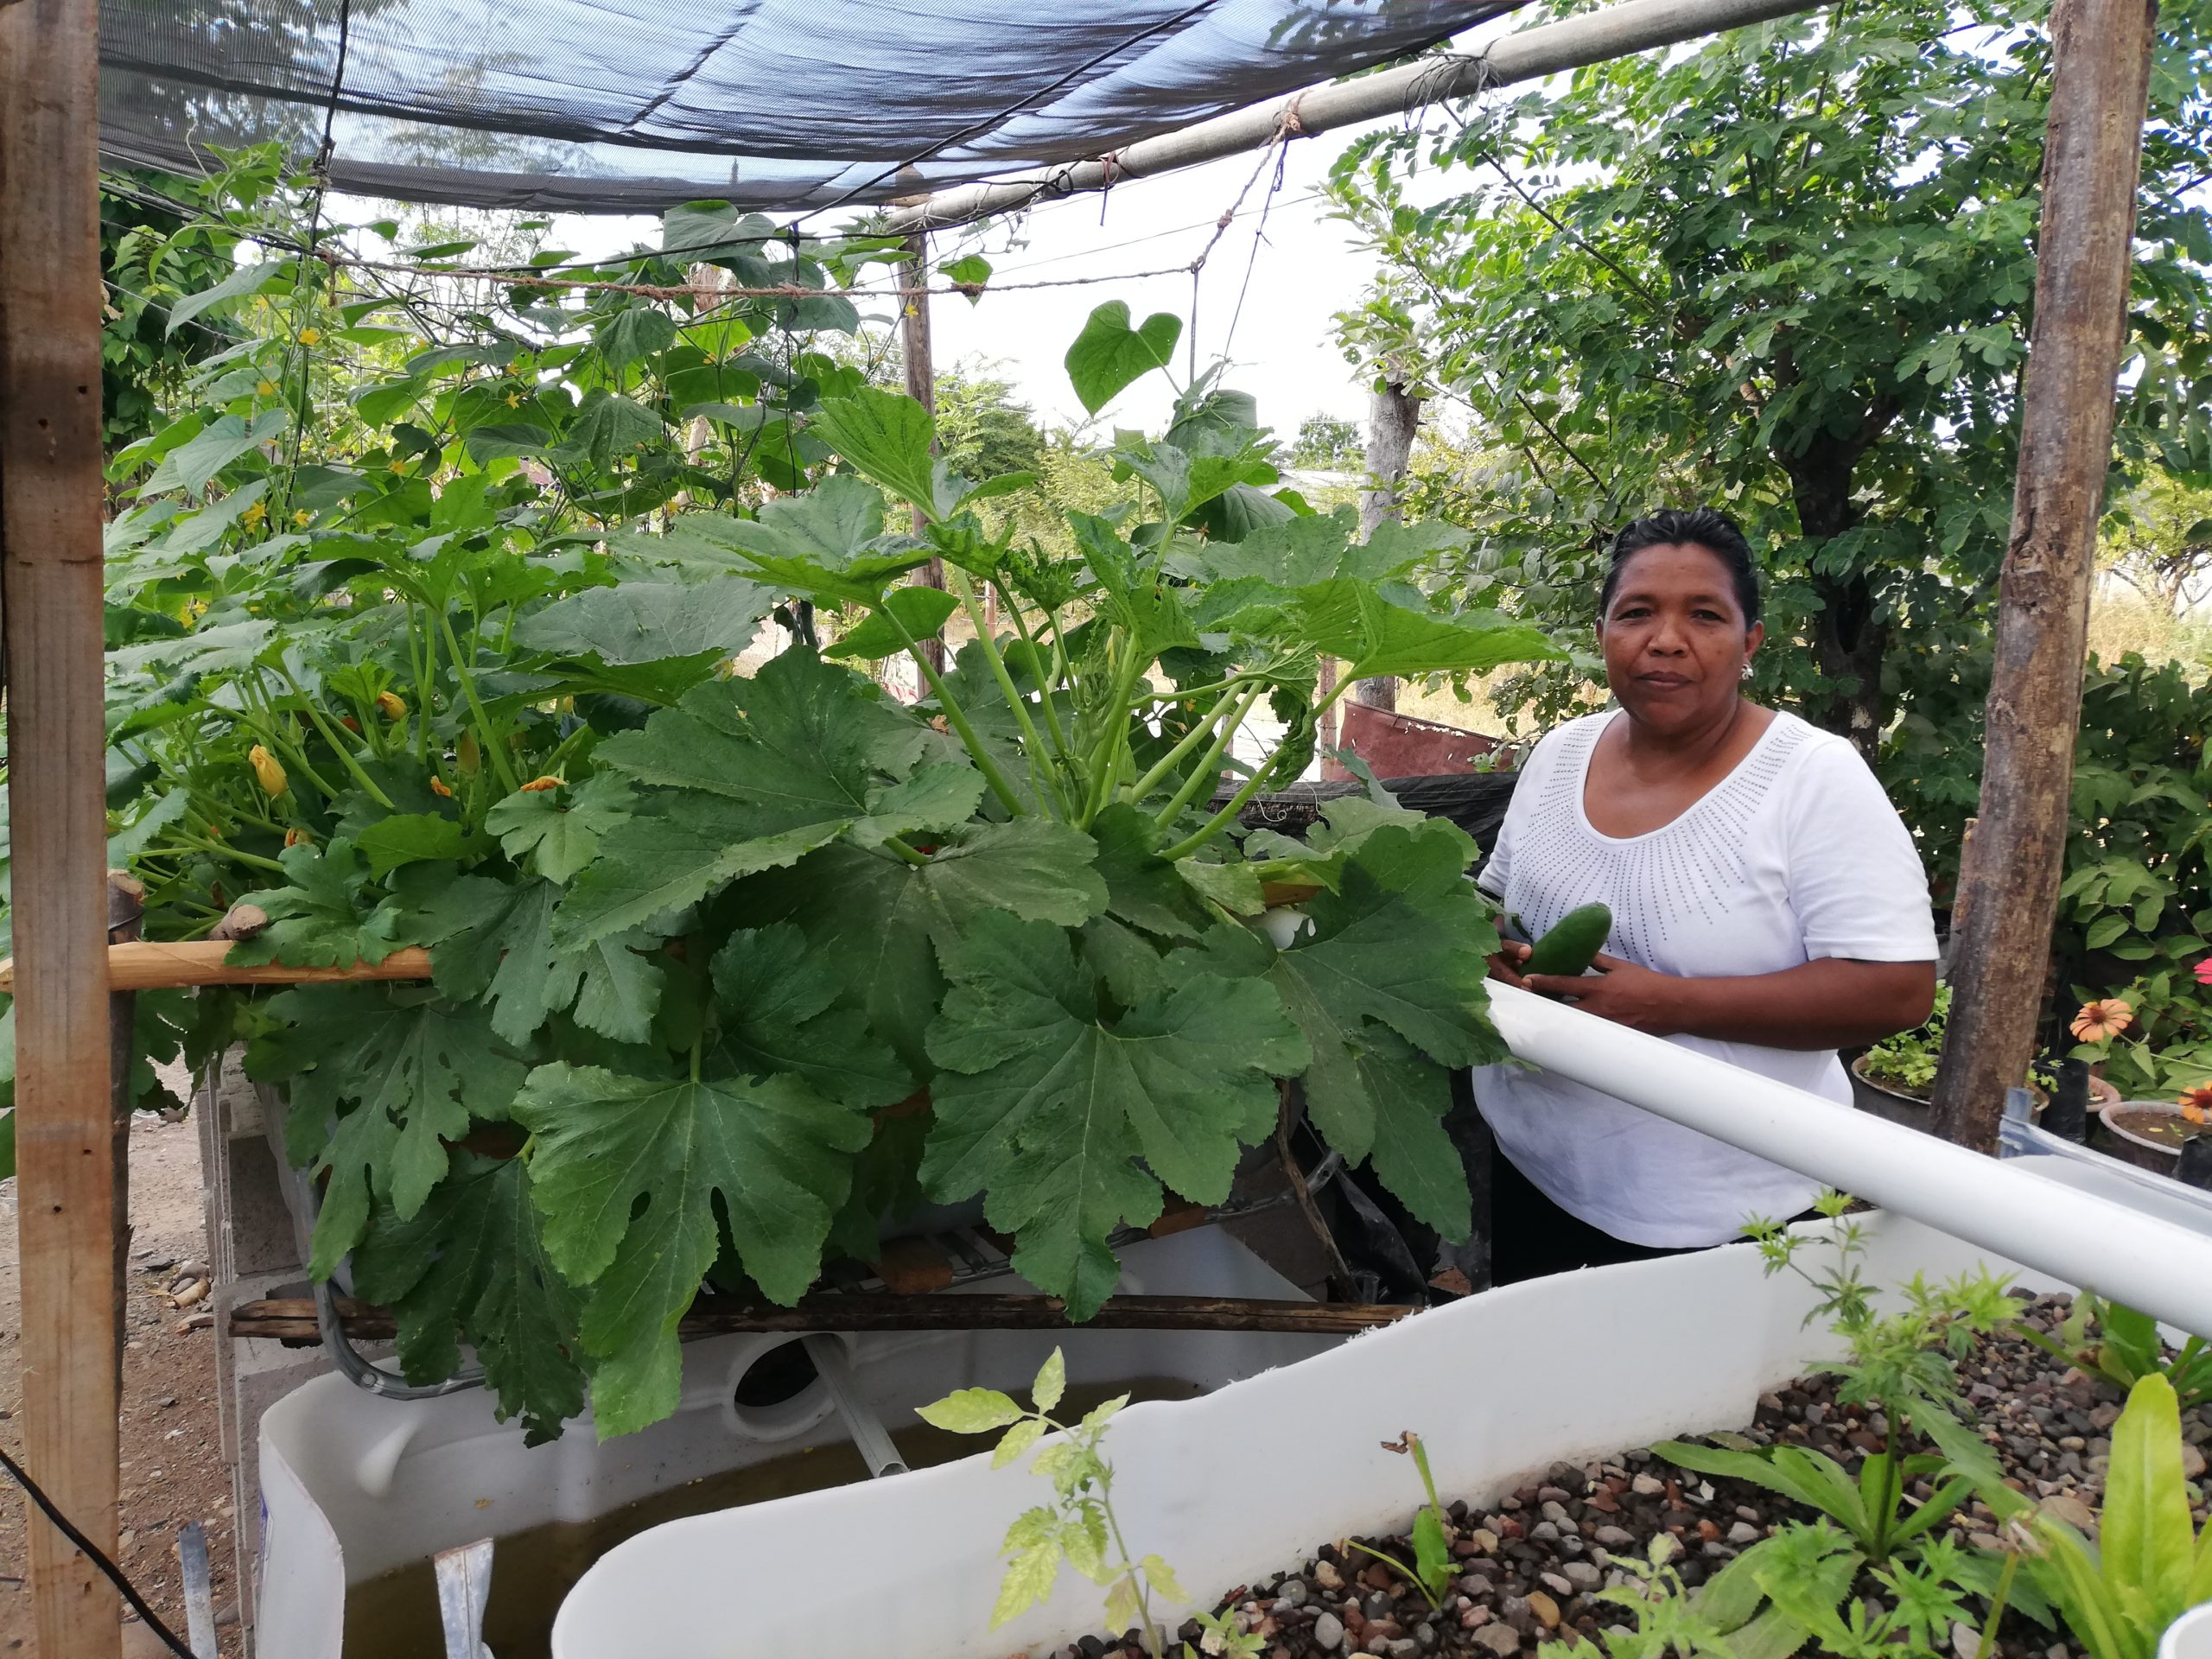 Honduran woman tending to plants